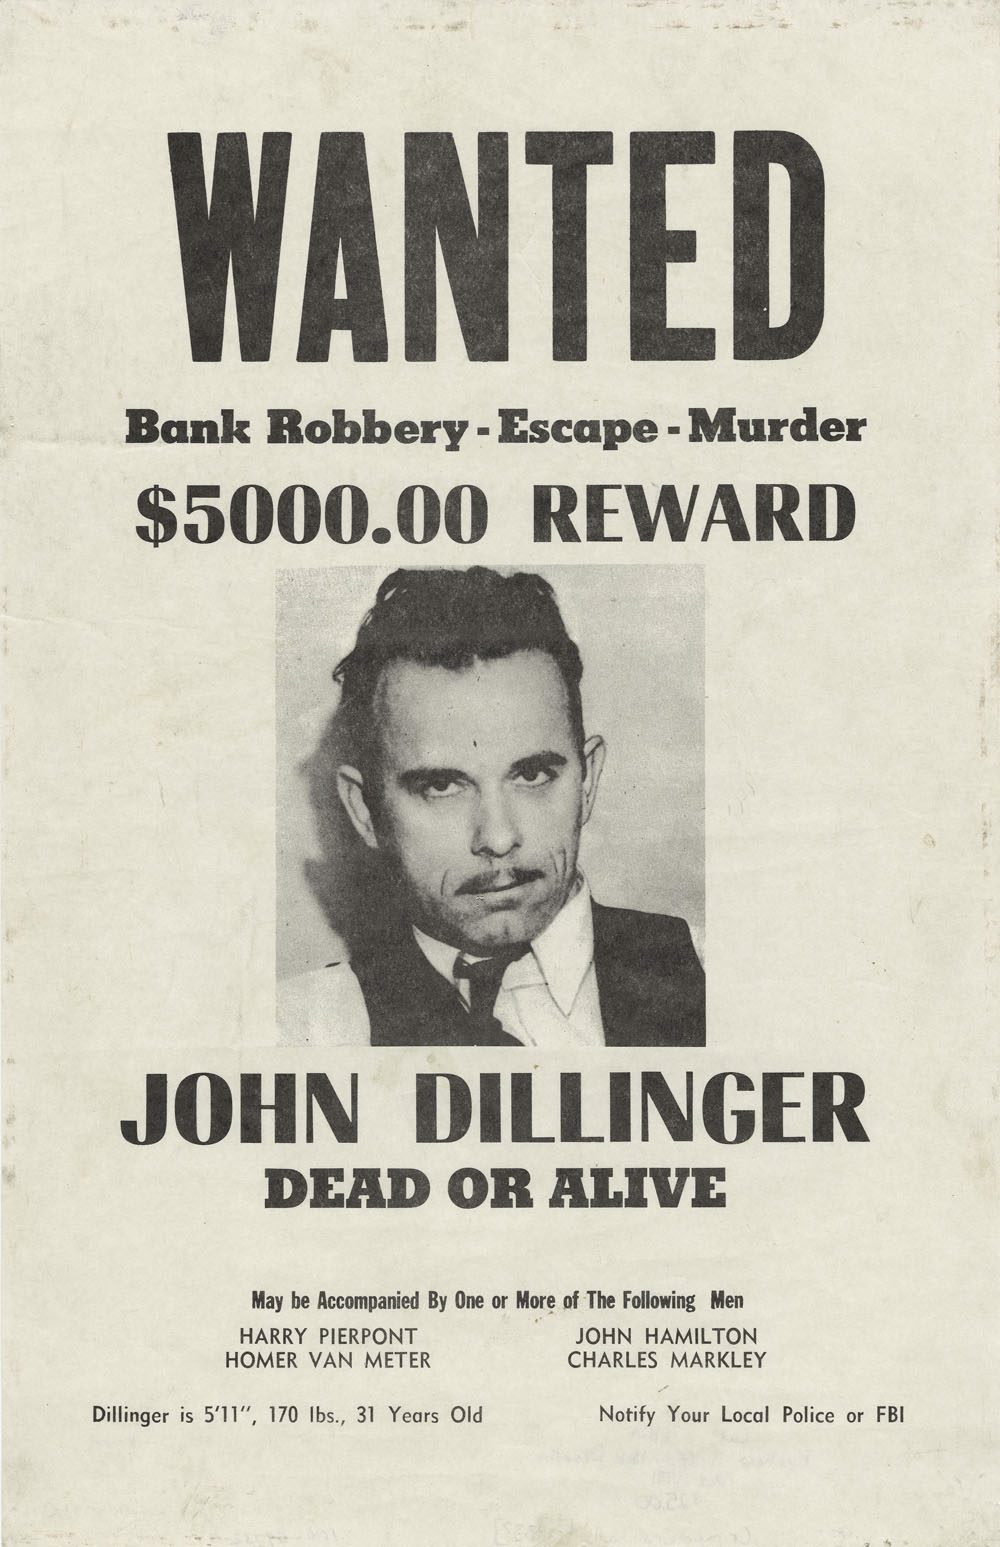 Wanted: John Dillinger, Dead or Alive